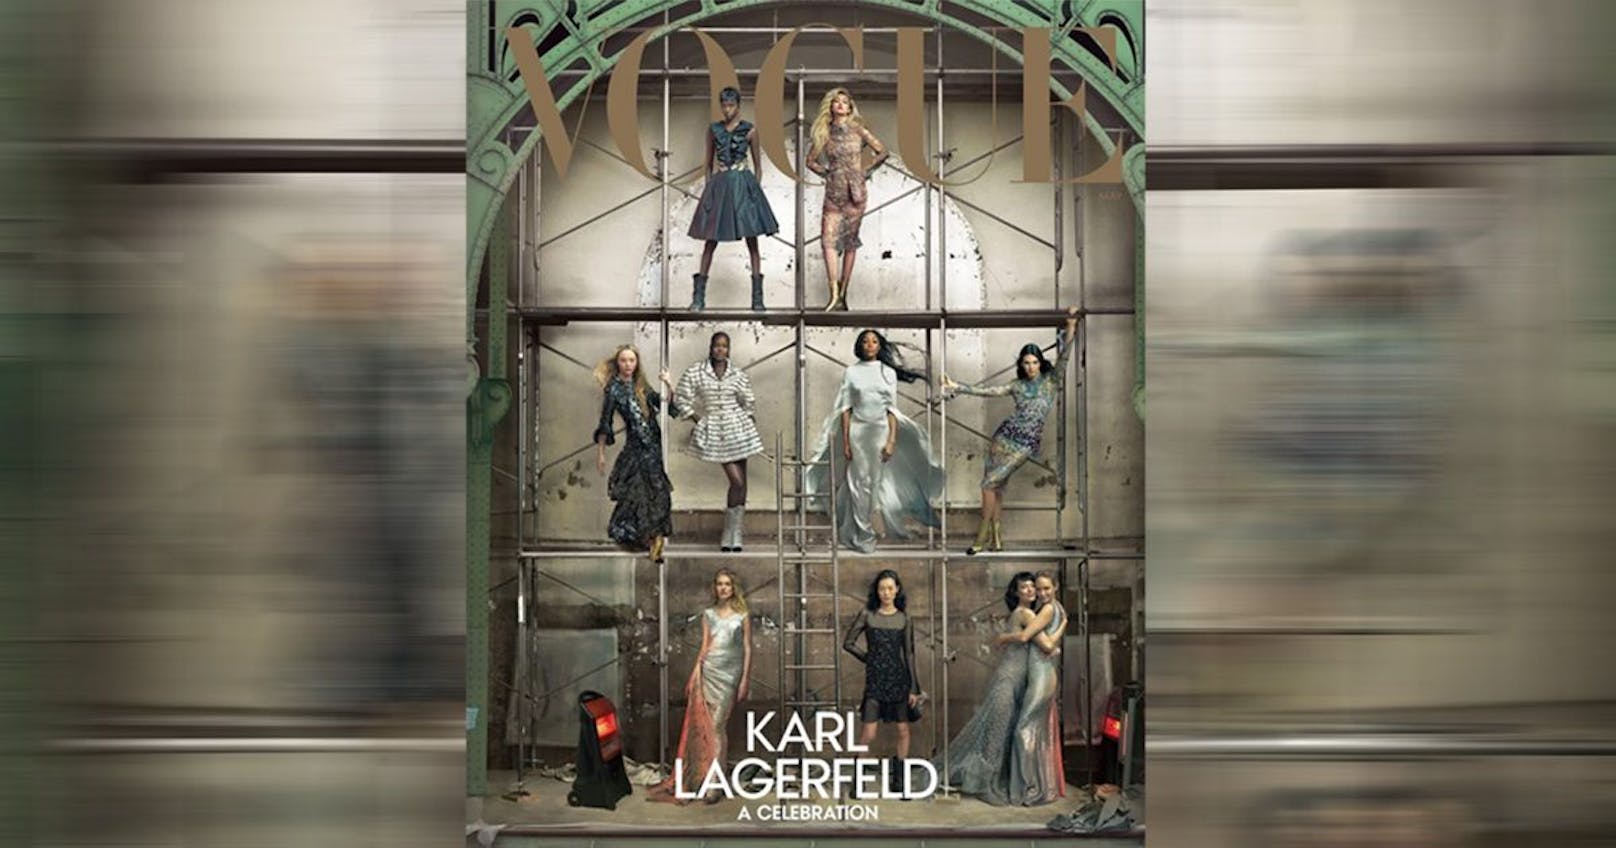 Das aktuelle Mai-Cover der US-"Vogue" wurde kritisiert, weil Lagerfelds Muse Cara Delevingne fehlte. <a data-li-document-ref="100265591" href="https://www.heute.at/g/life-fashion-beauty-wo-zur-hoelle-ist-cara-neues-vogue-cover-sorgt-fuer-furore-100265591">Link</a>